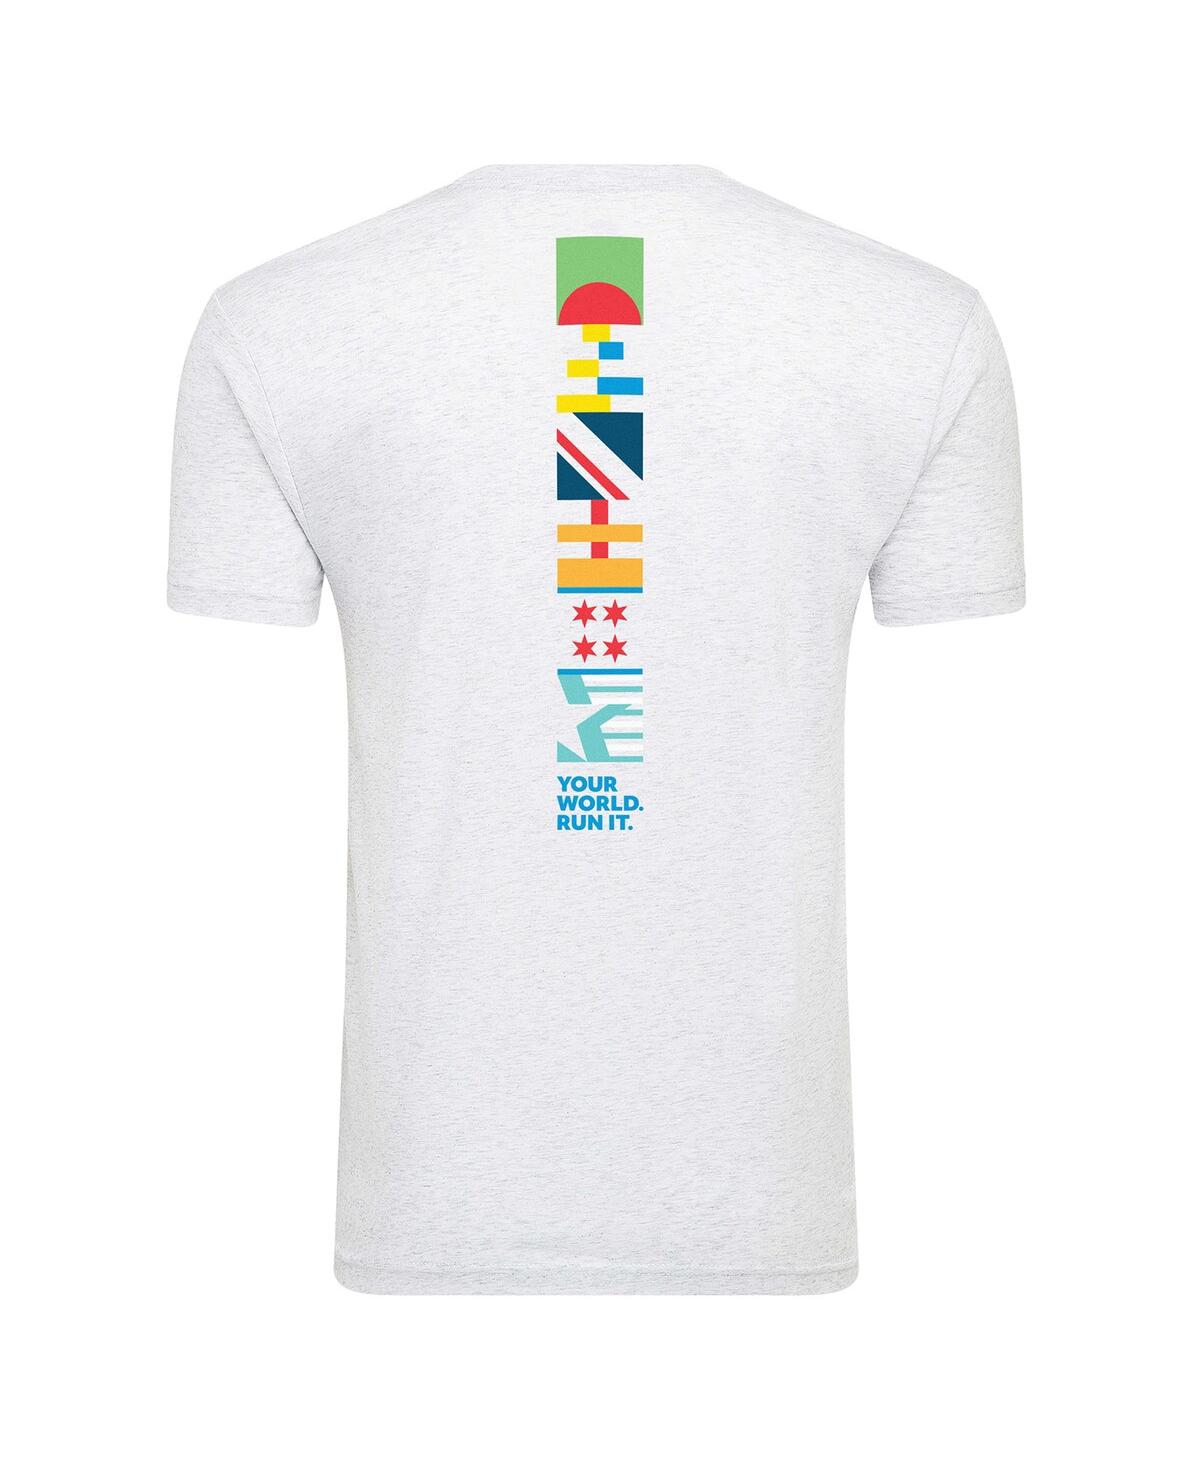 Shop Sportiqe Men's And Women's  White World Marathon Majors Comfy Tri-blend T-shirt